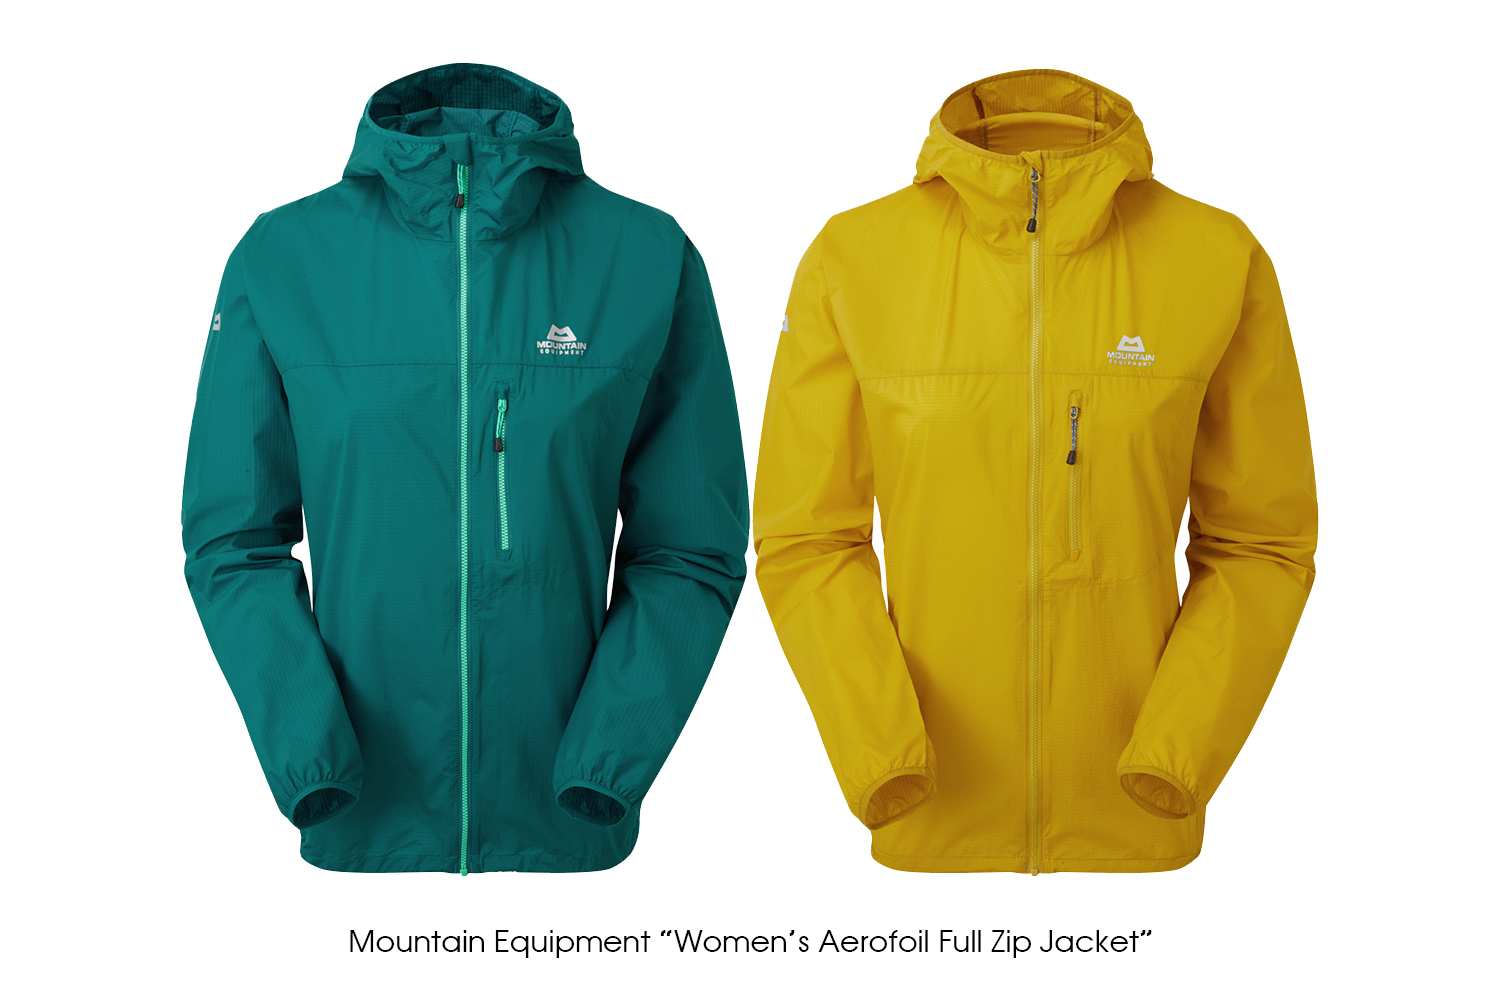 MOUNTAIN EQUIPMENT "Womens Aerofoil Full Zip Jacket"